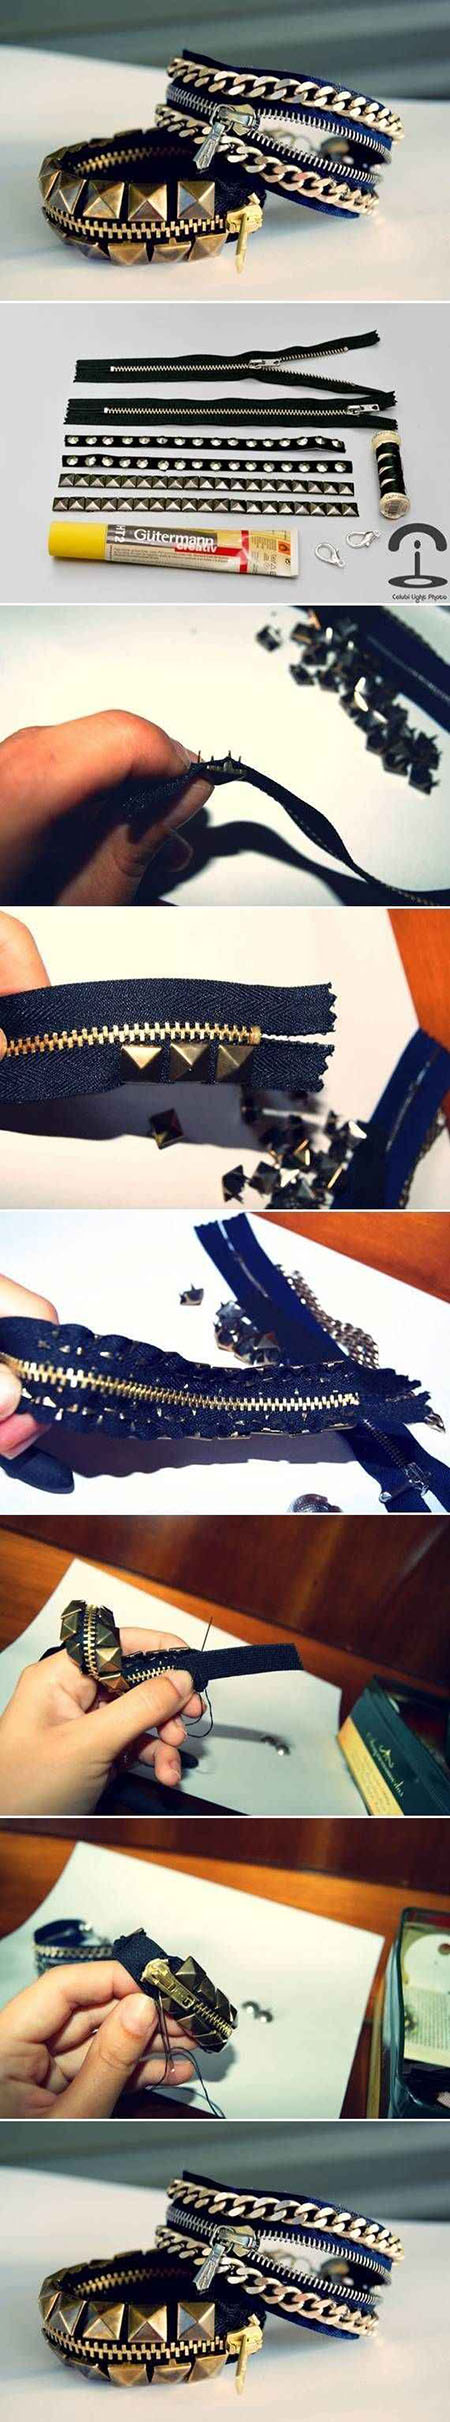 Studded Zipper Bracelet | Useful Tutorials